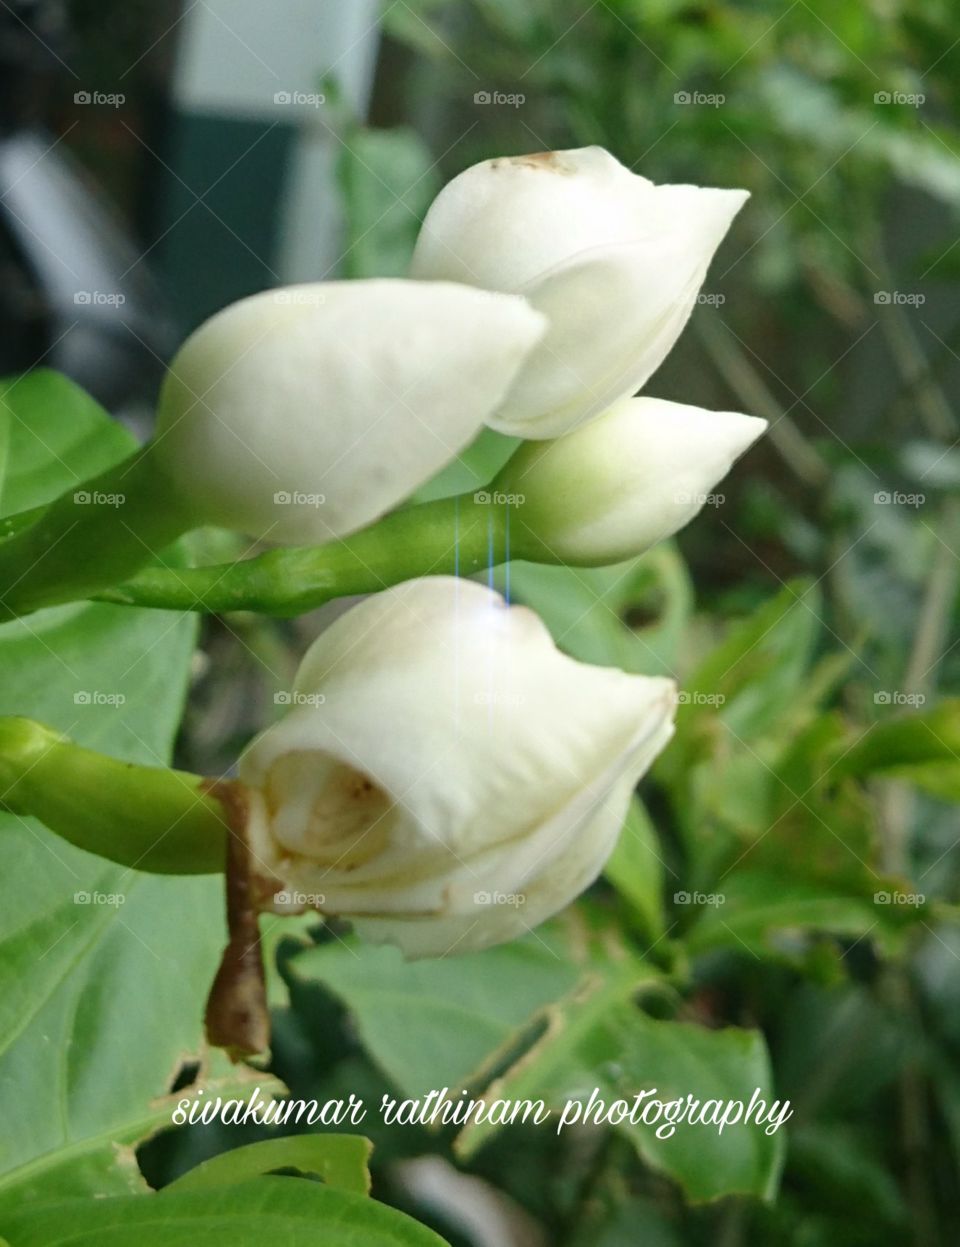 India Puducherry plant with white flower